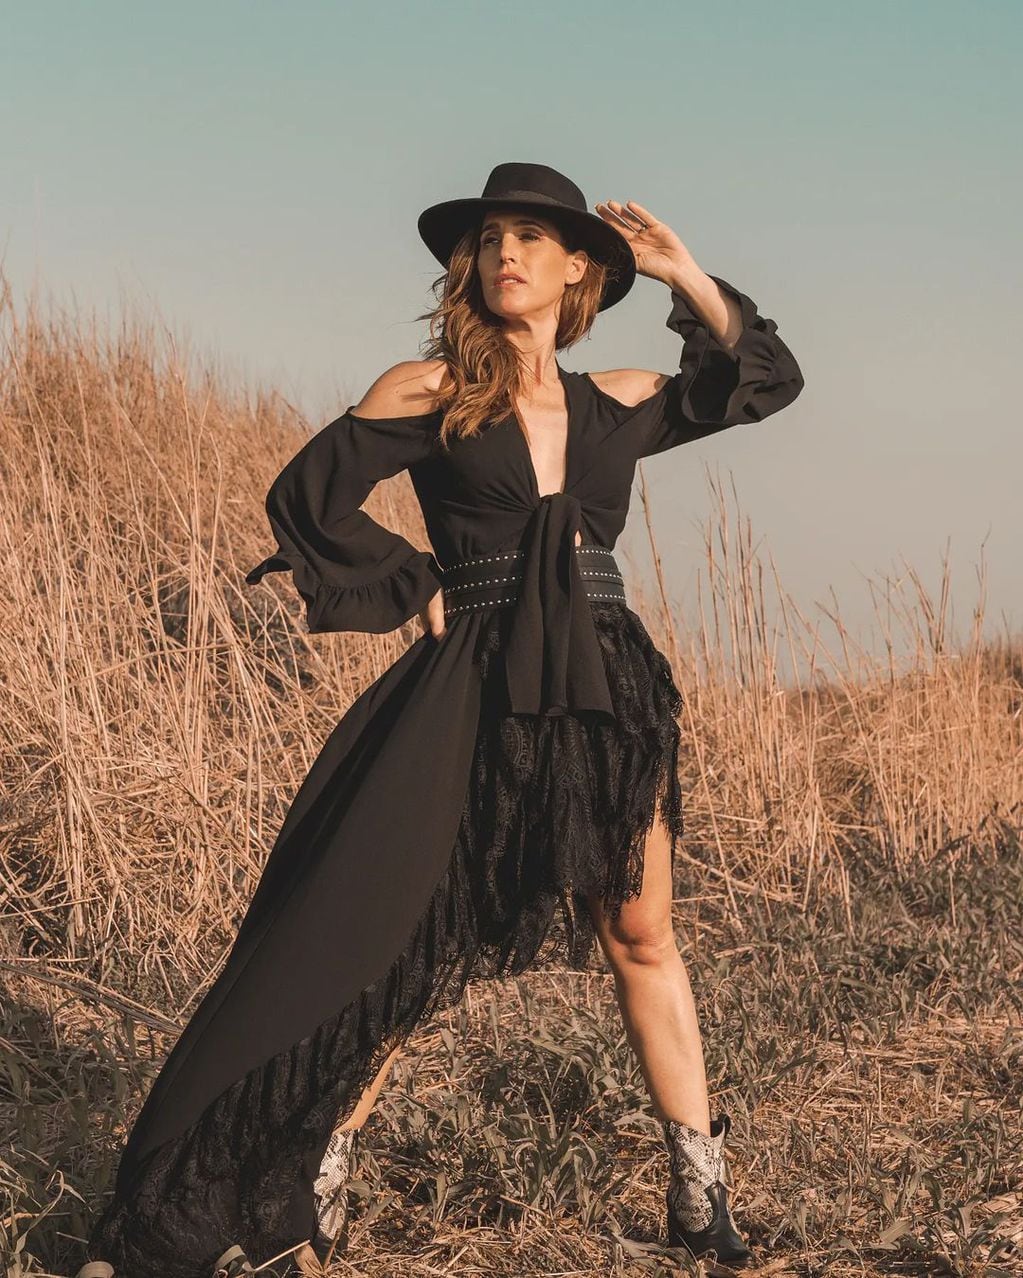 Soledad Pastorutti levantó la temperatura con un vestido negro de tajo rpofundo